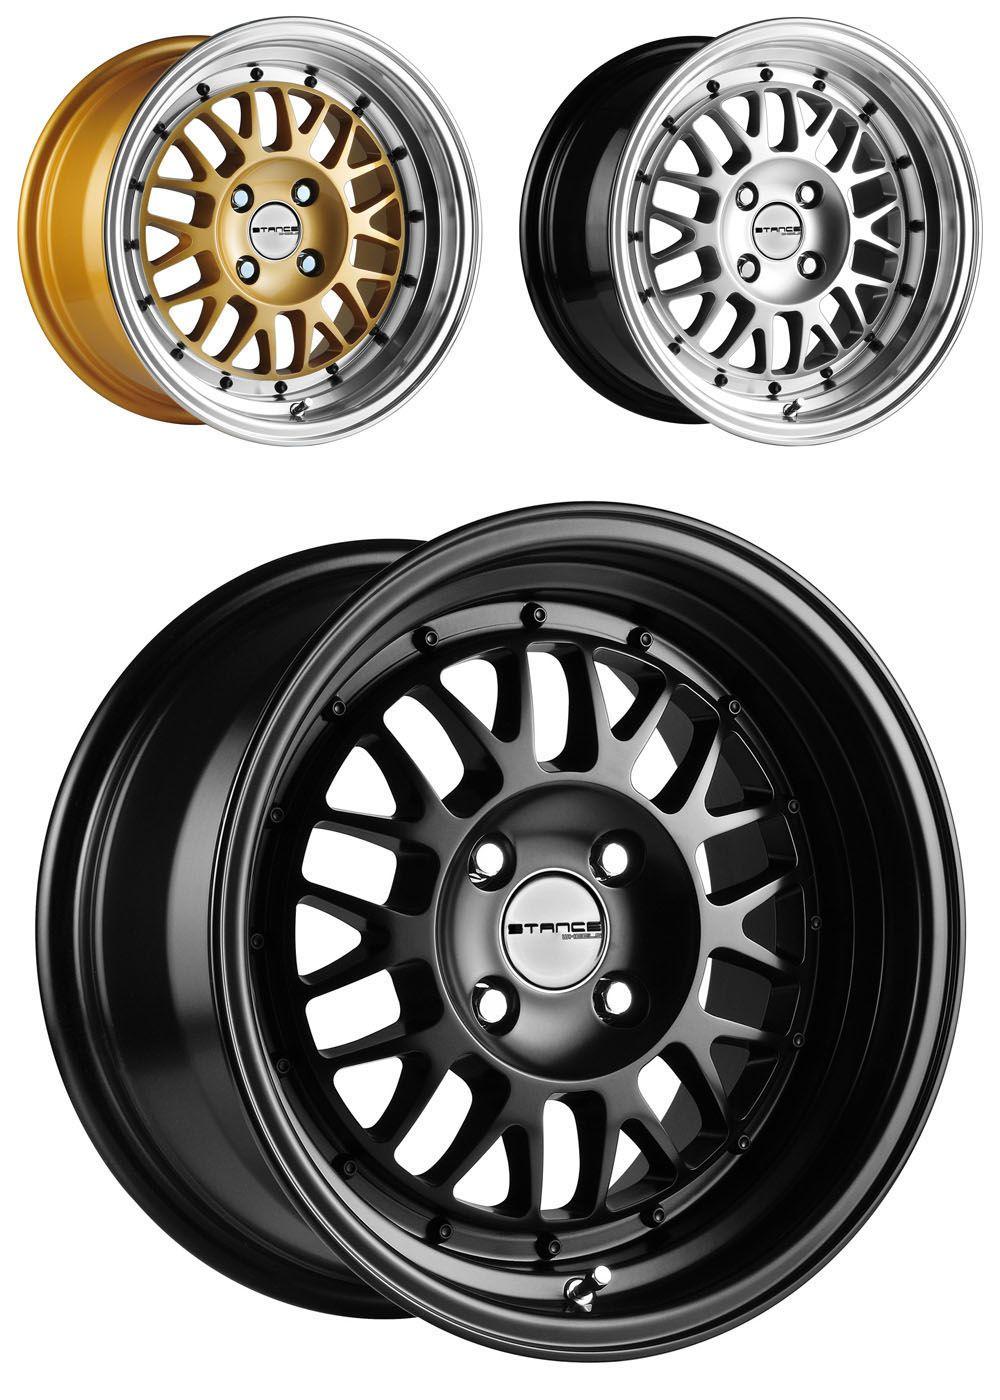 Stance Wheels Logo - FIAT 500 -Stance Mindset Wheel Set (4) 15x8 Mndset Wheels 15 x 8